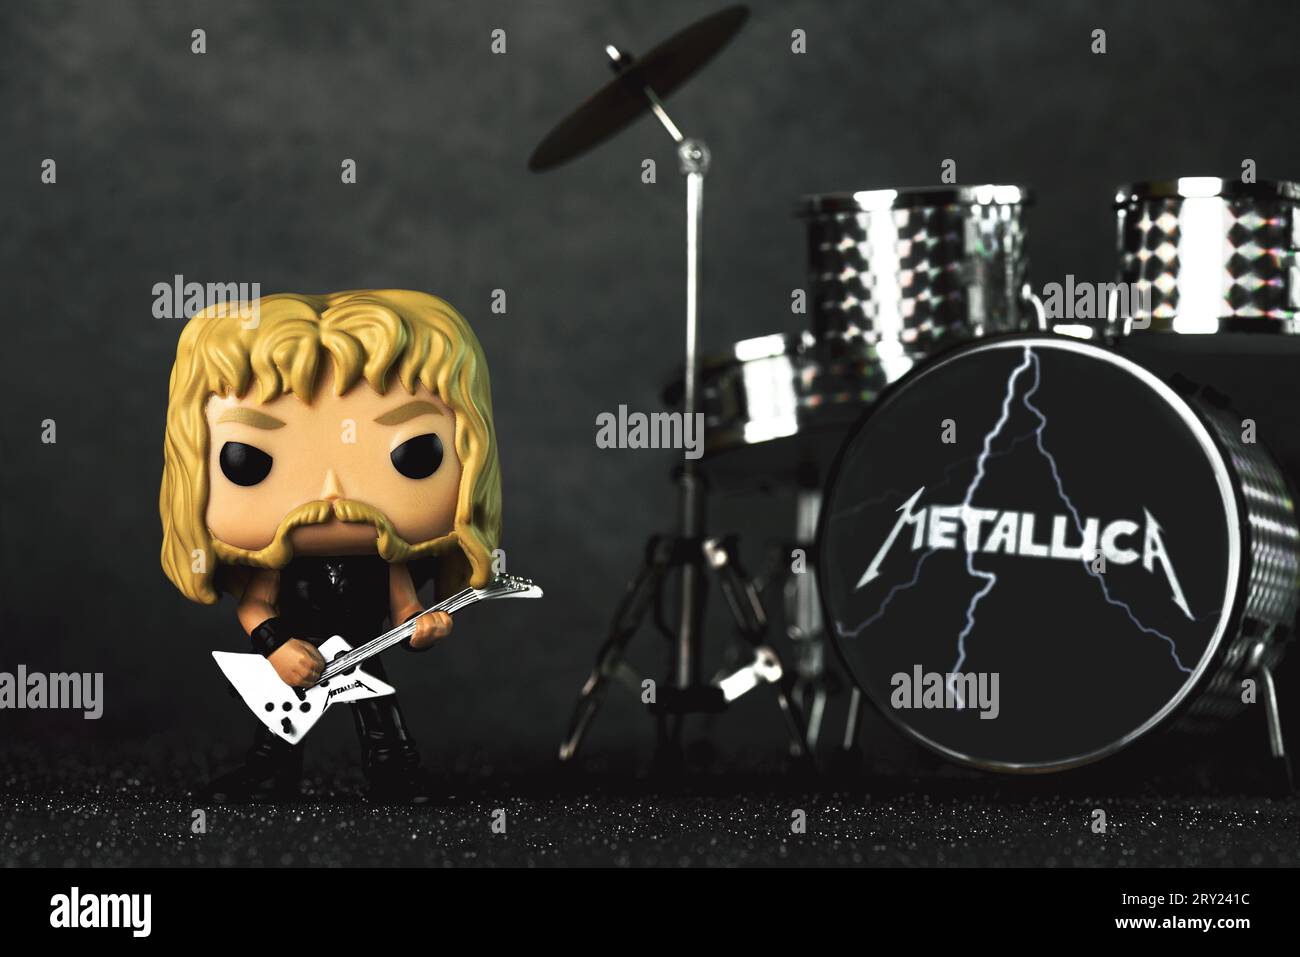 Funko POP vinyl figure of James hetfield singer of the american heavy metal group Metallica next to the battery against dark background. Illustrative Stock Photo